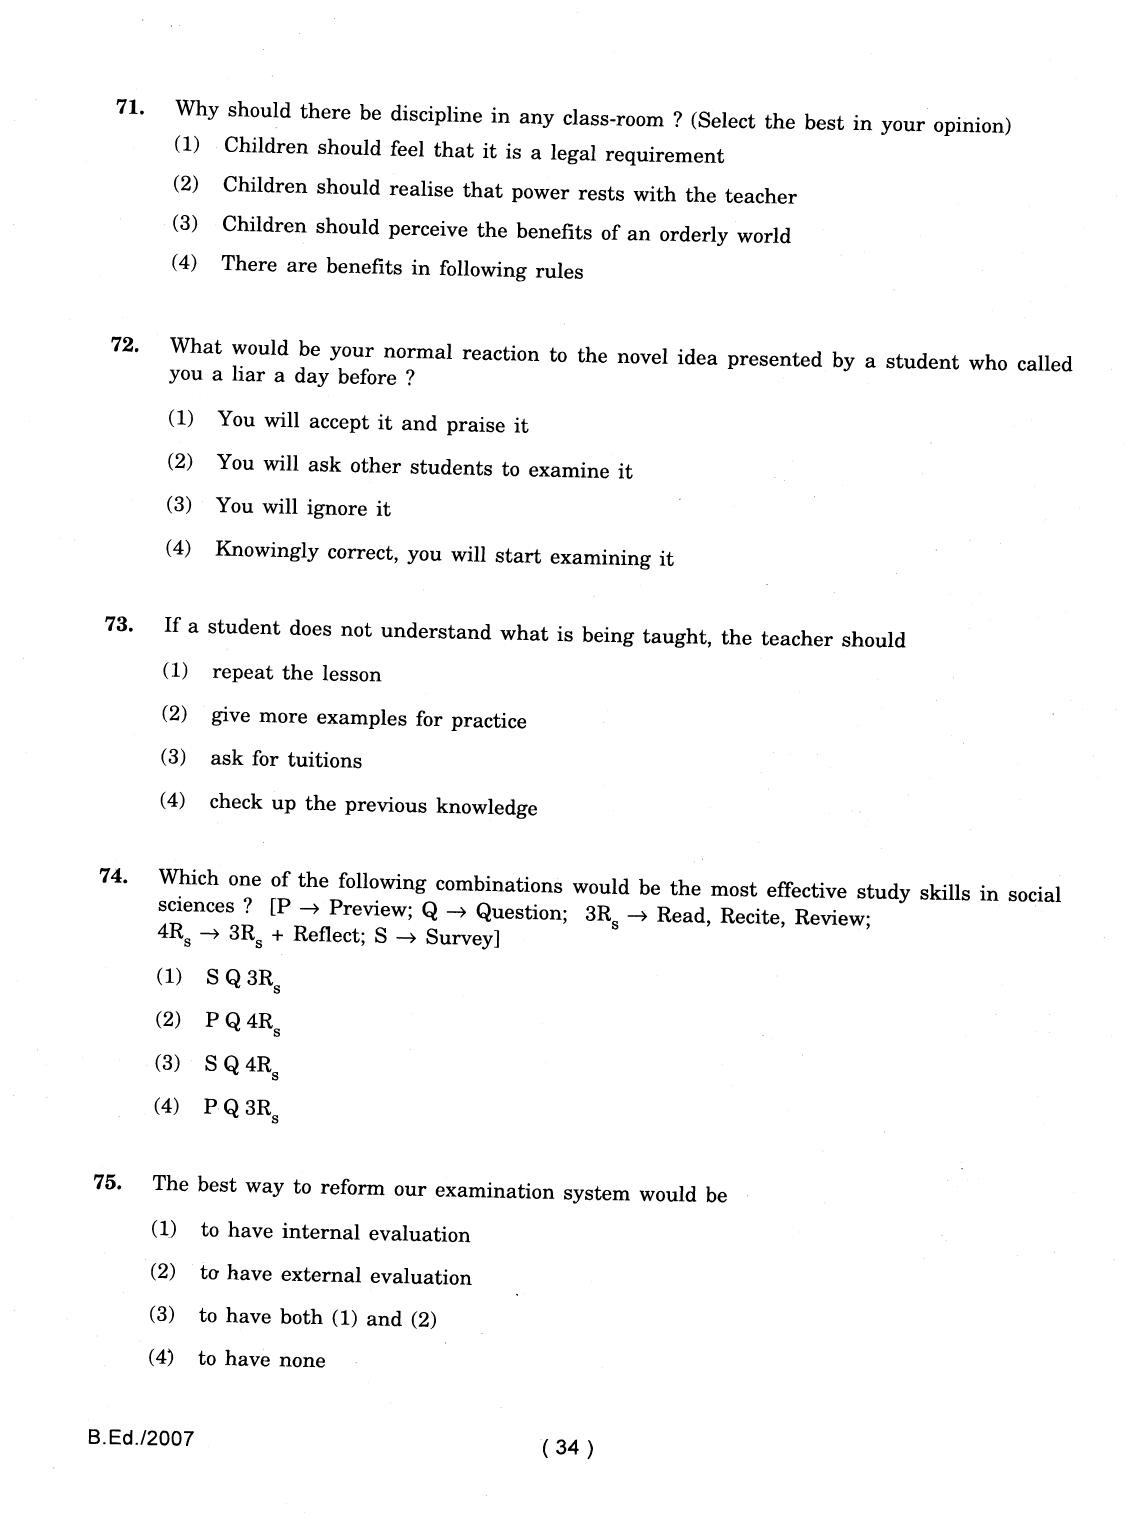 IGNOU B.Ed 2007 Question Paper - Page 34